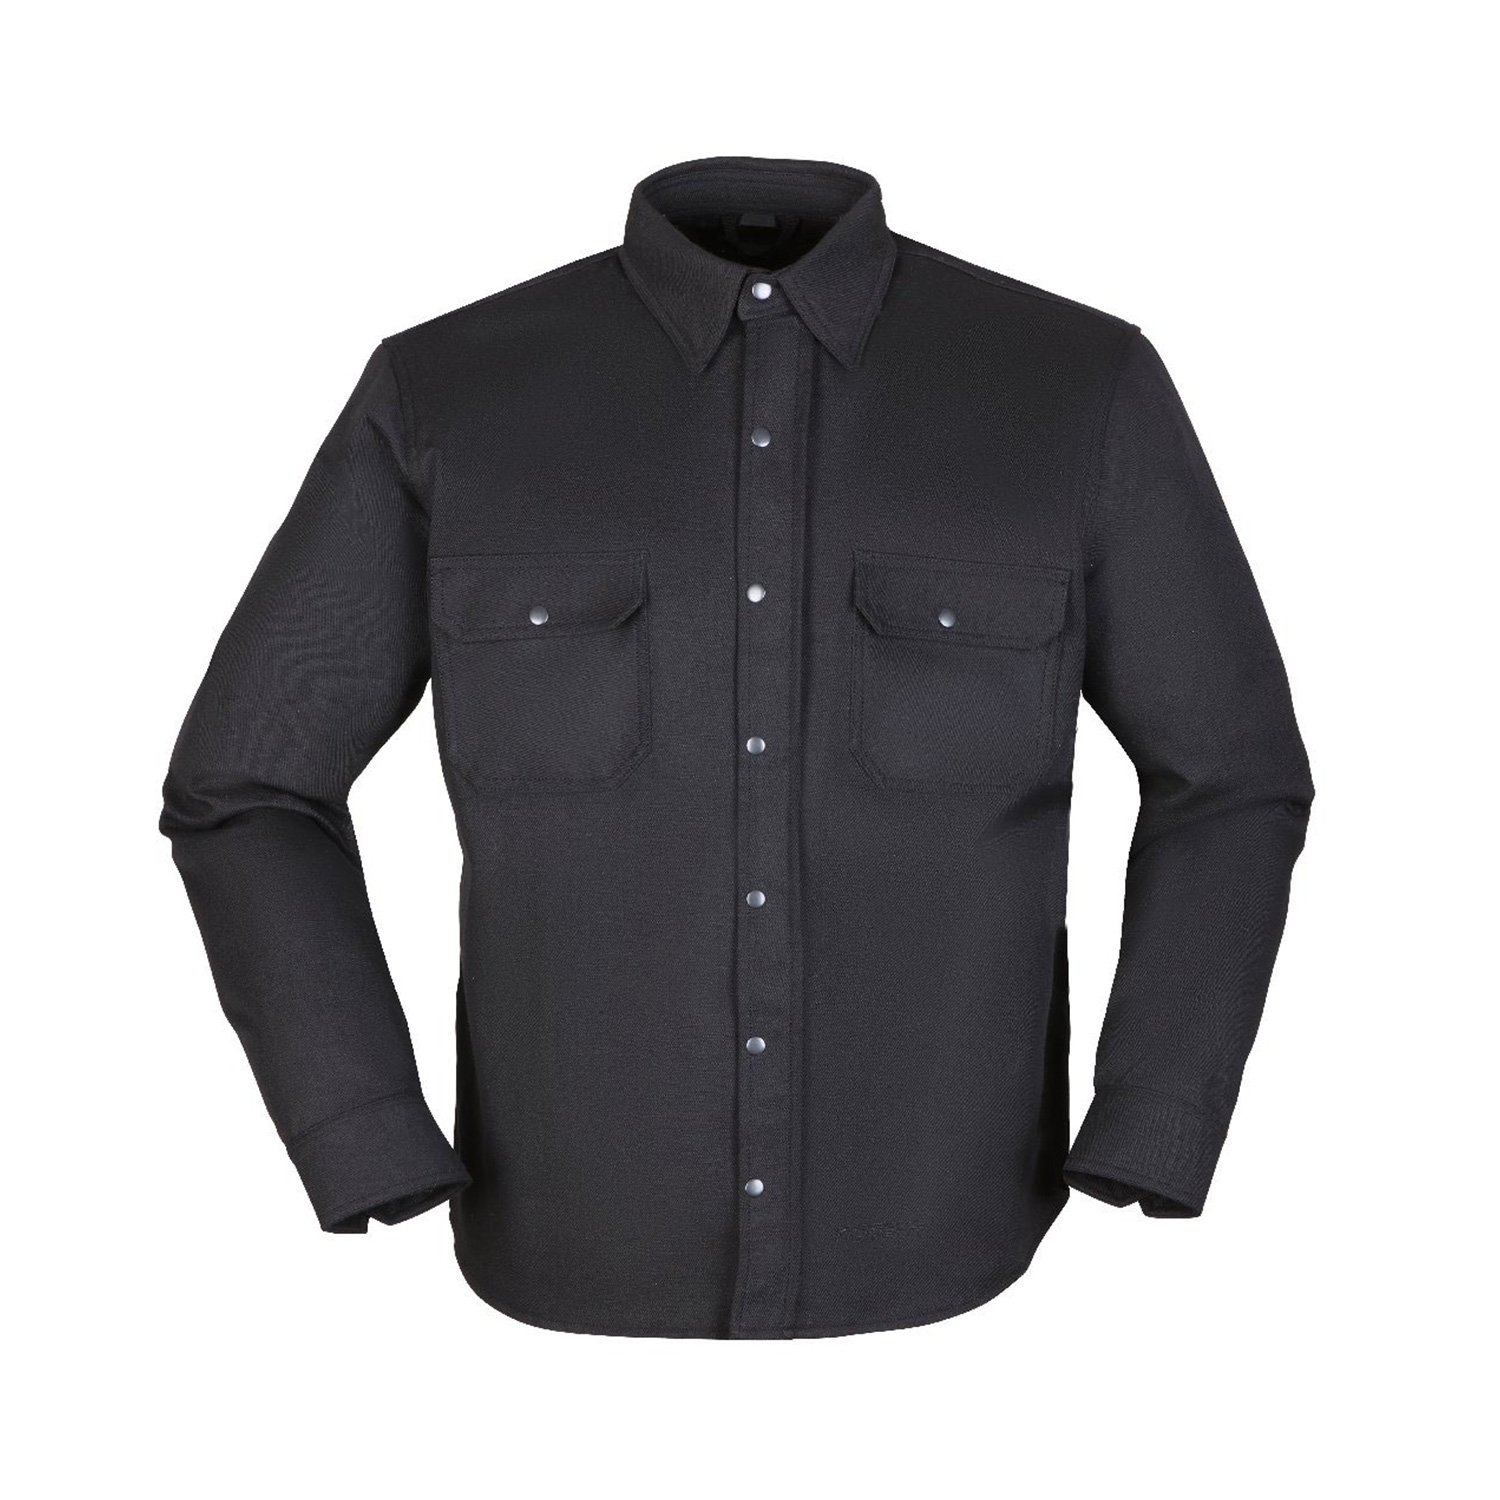 Image of Modeka Colden Motoshirt Black Size XL ID 4045765209233